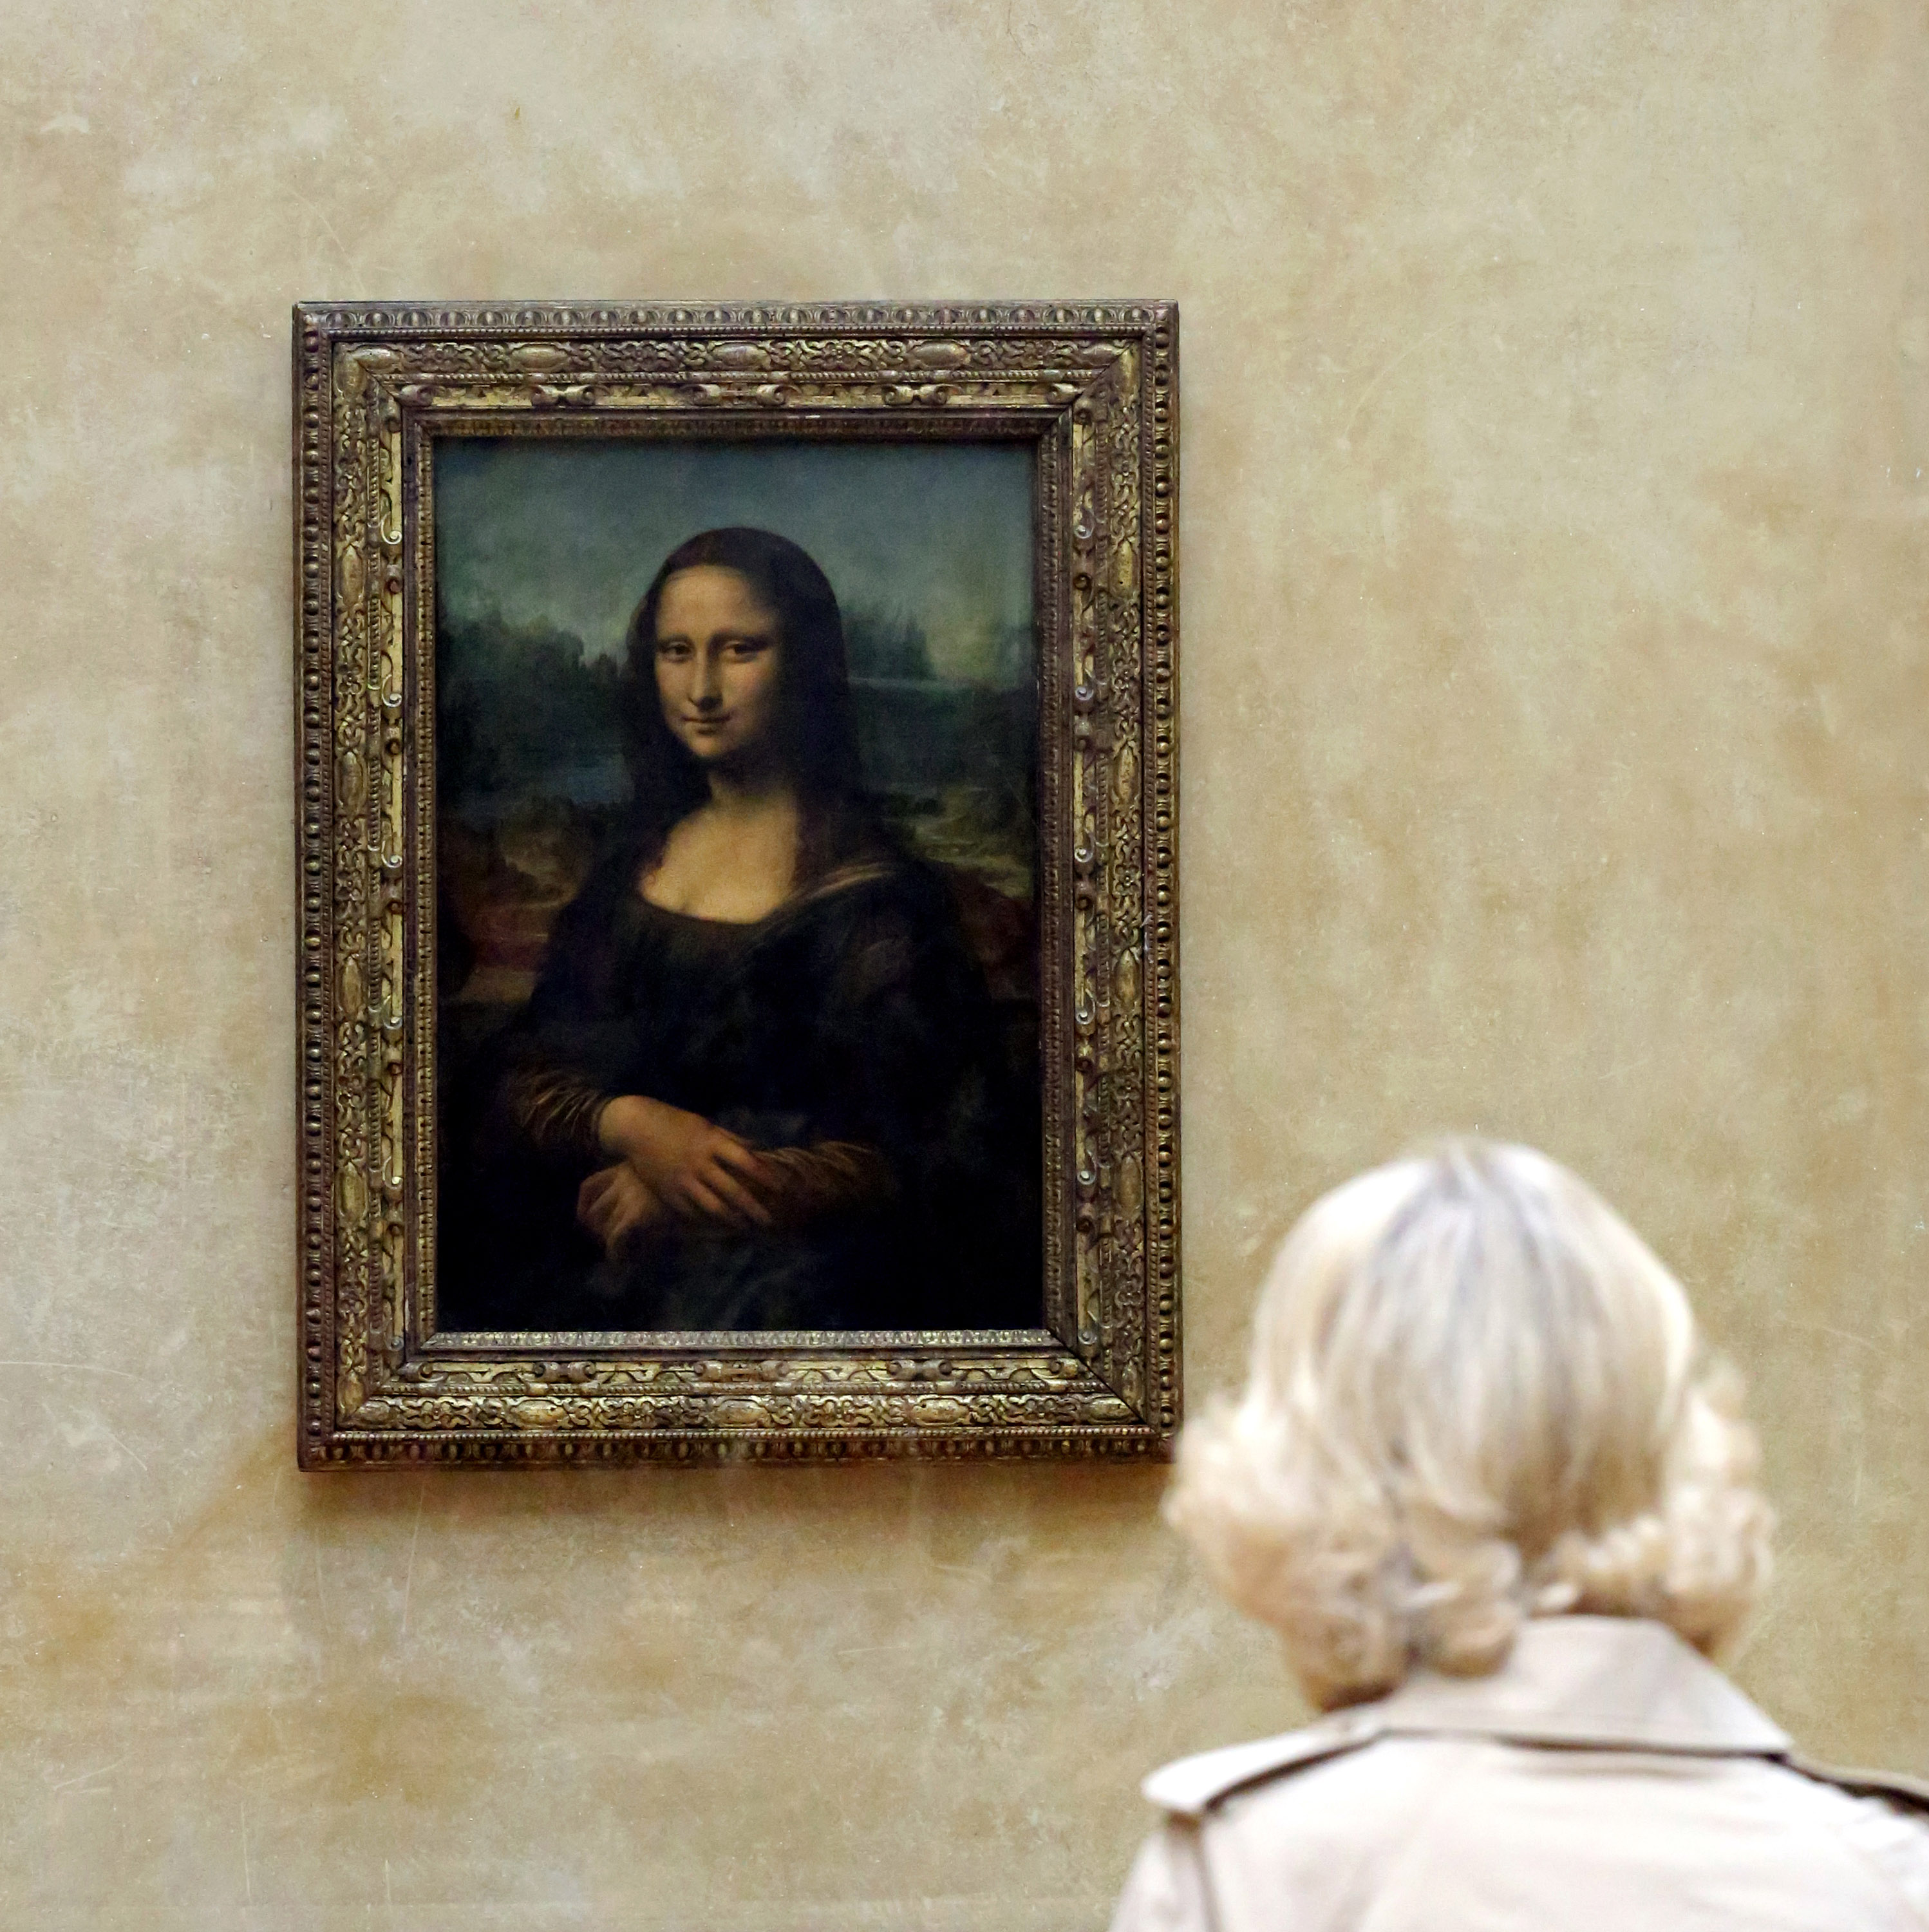 Real Mona Lisa Painting